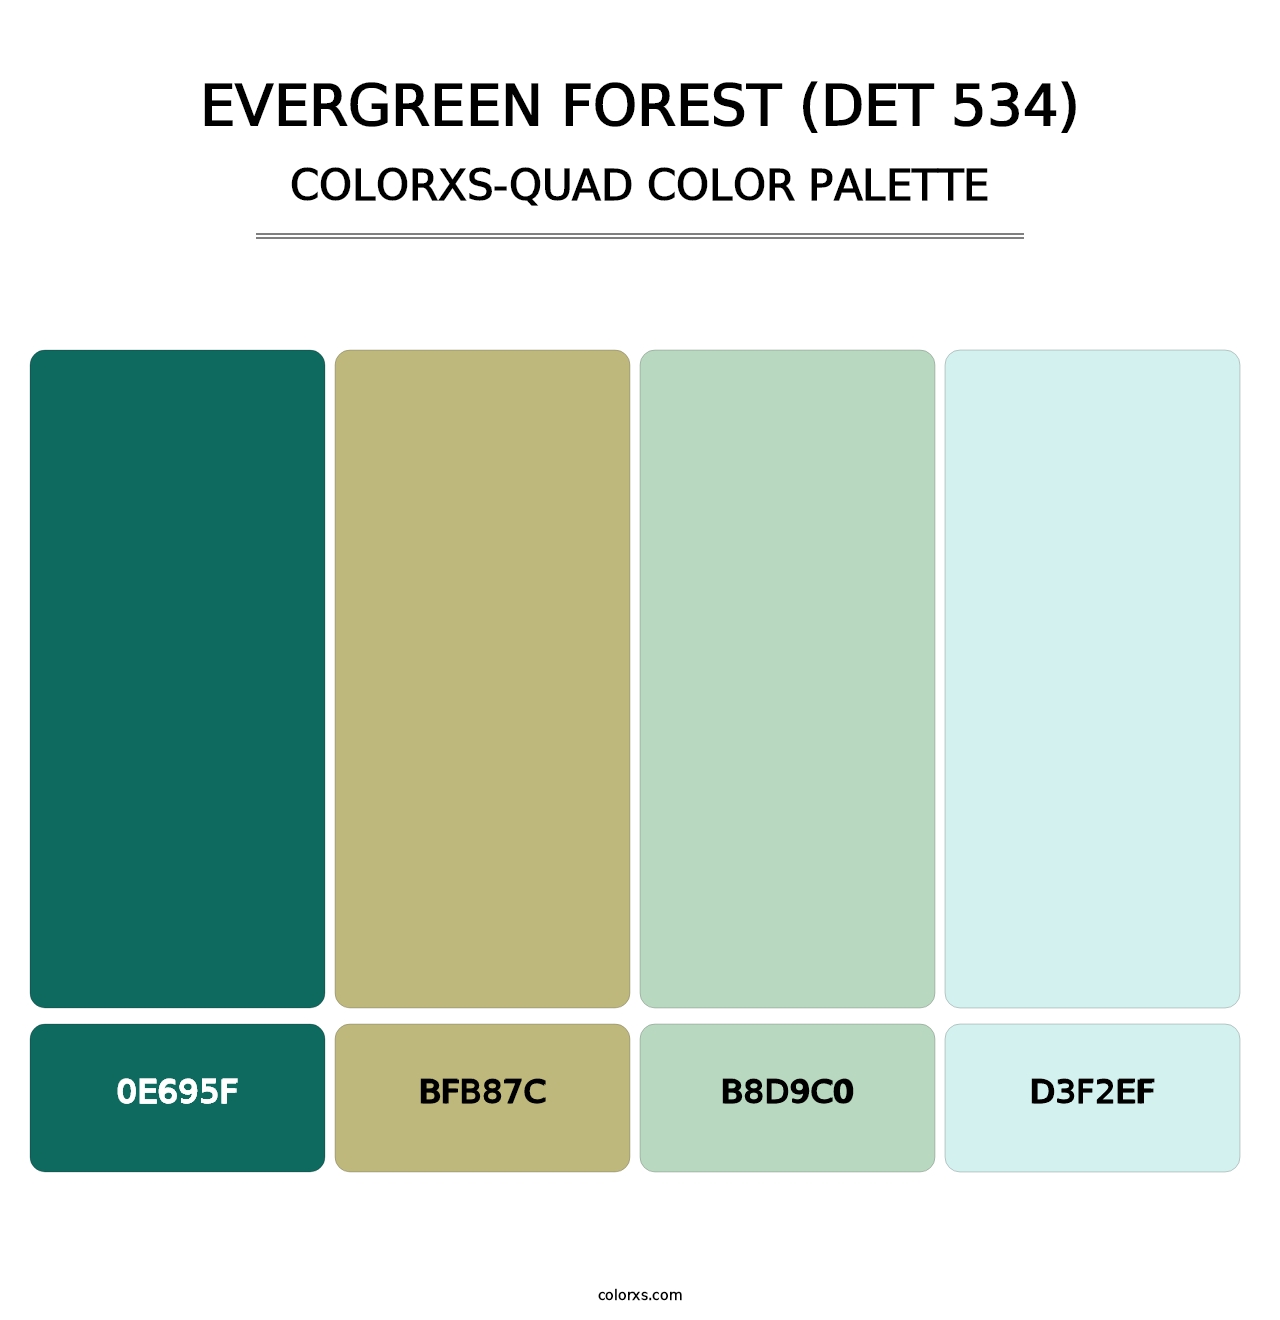 Evergreen Forest (DET 534) - Colorxs Quad Palette